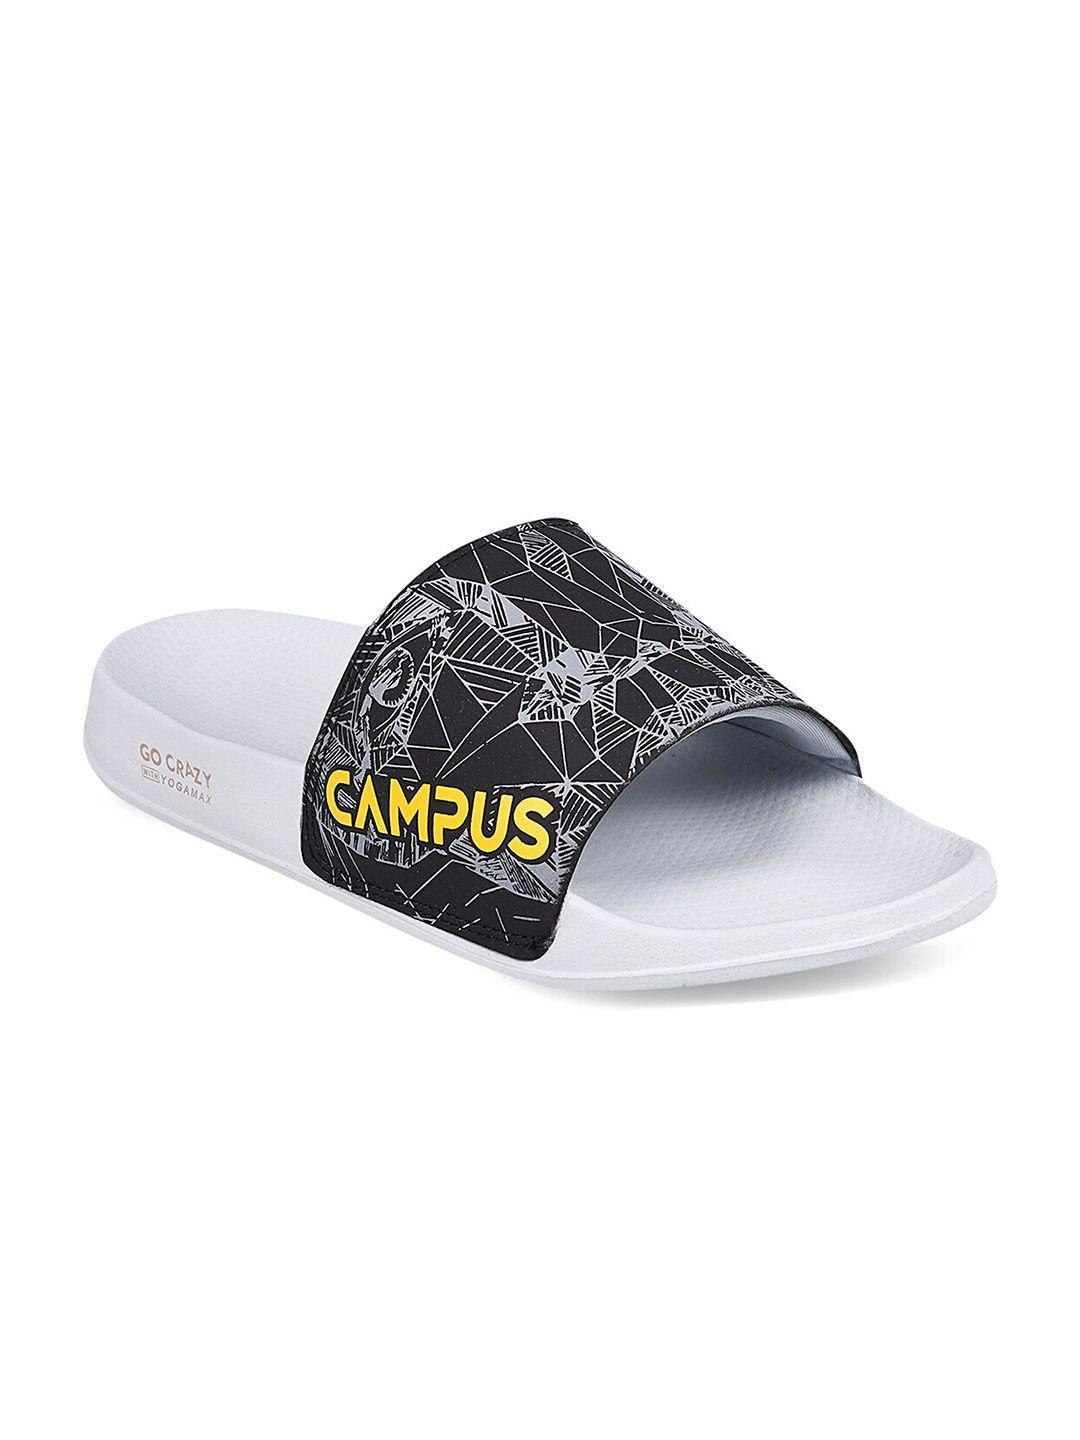 campus men black & white printed casual sliders